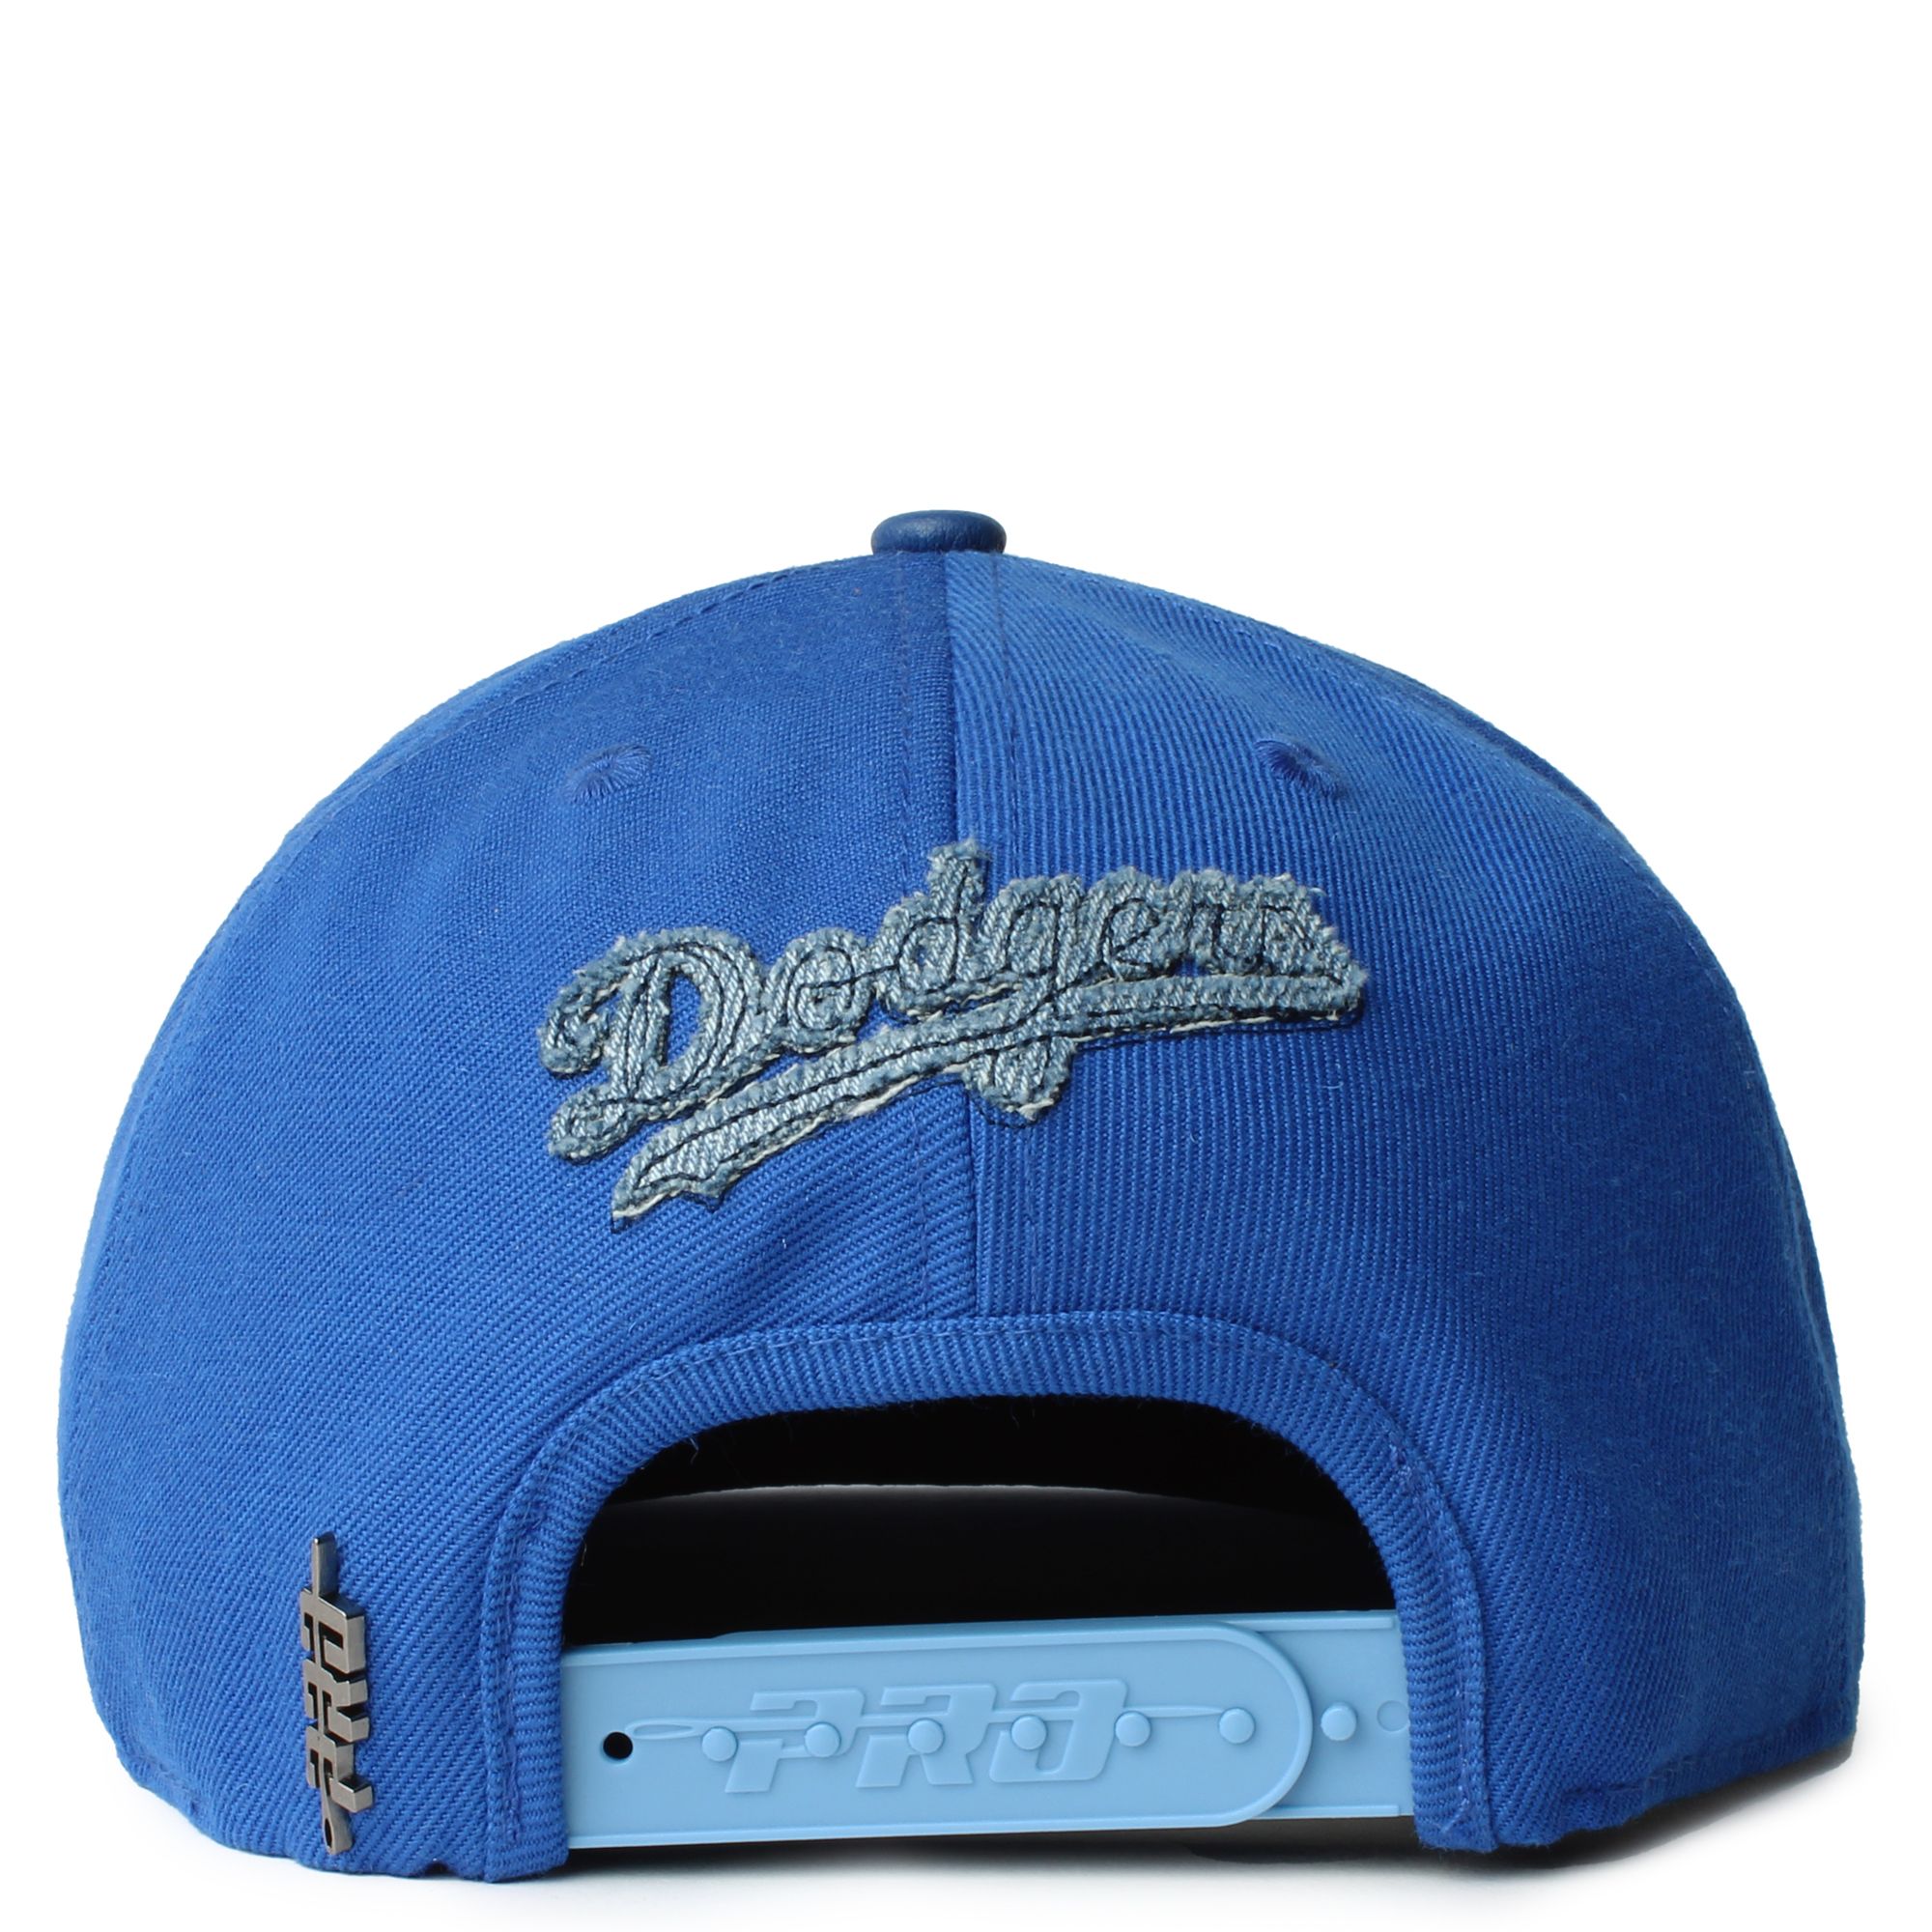 Los Angeles Snapback Black Blue Baseball Adjustable Hat Cap Flat